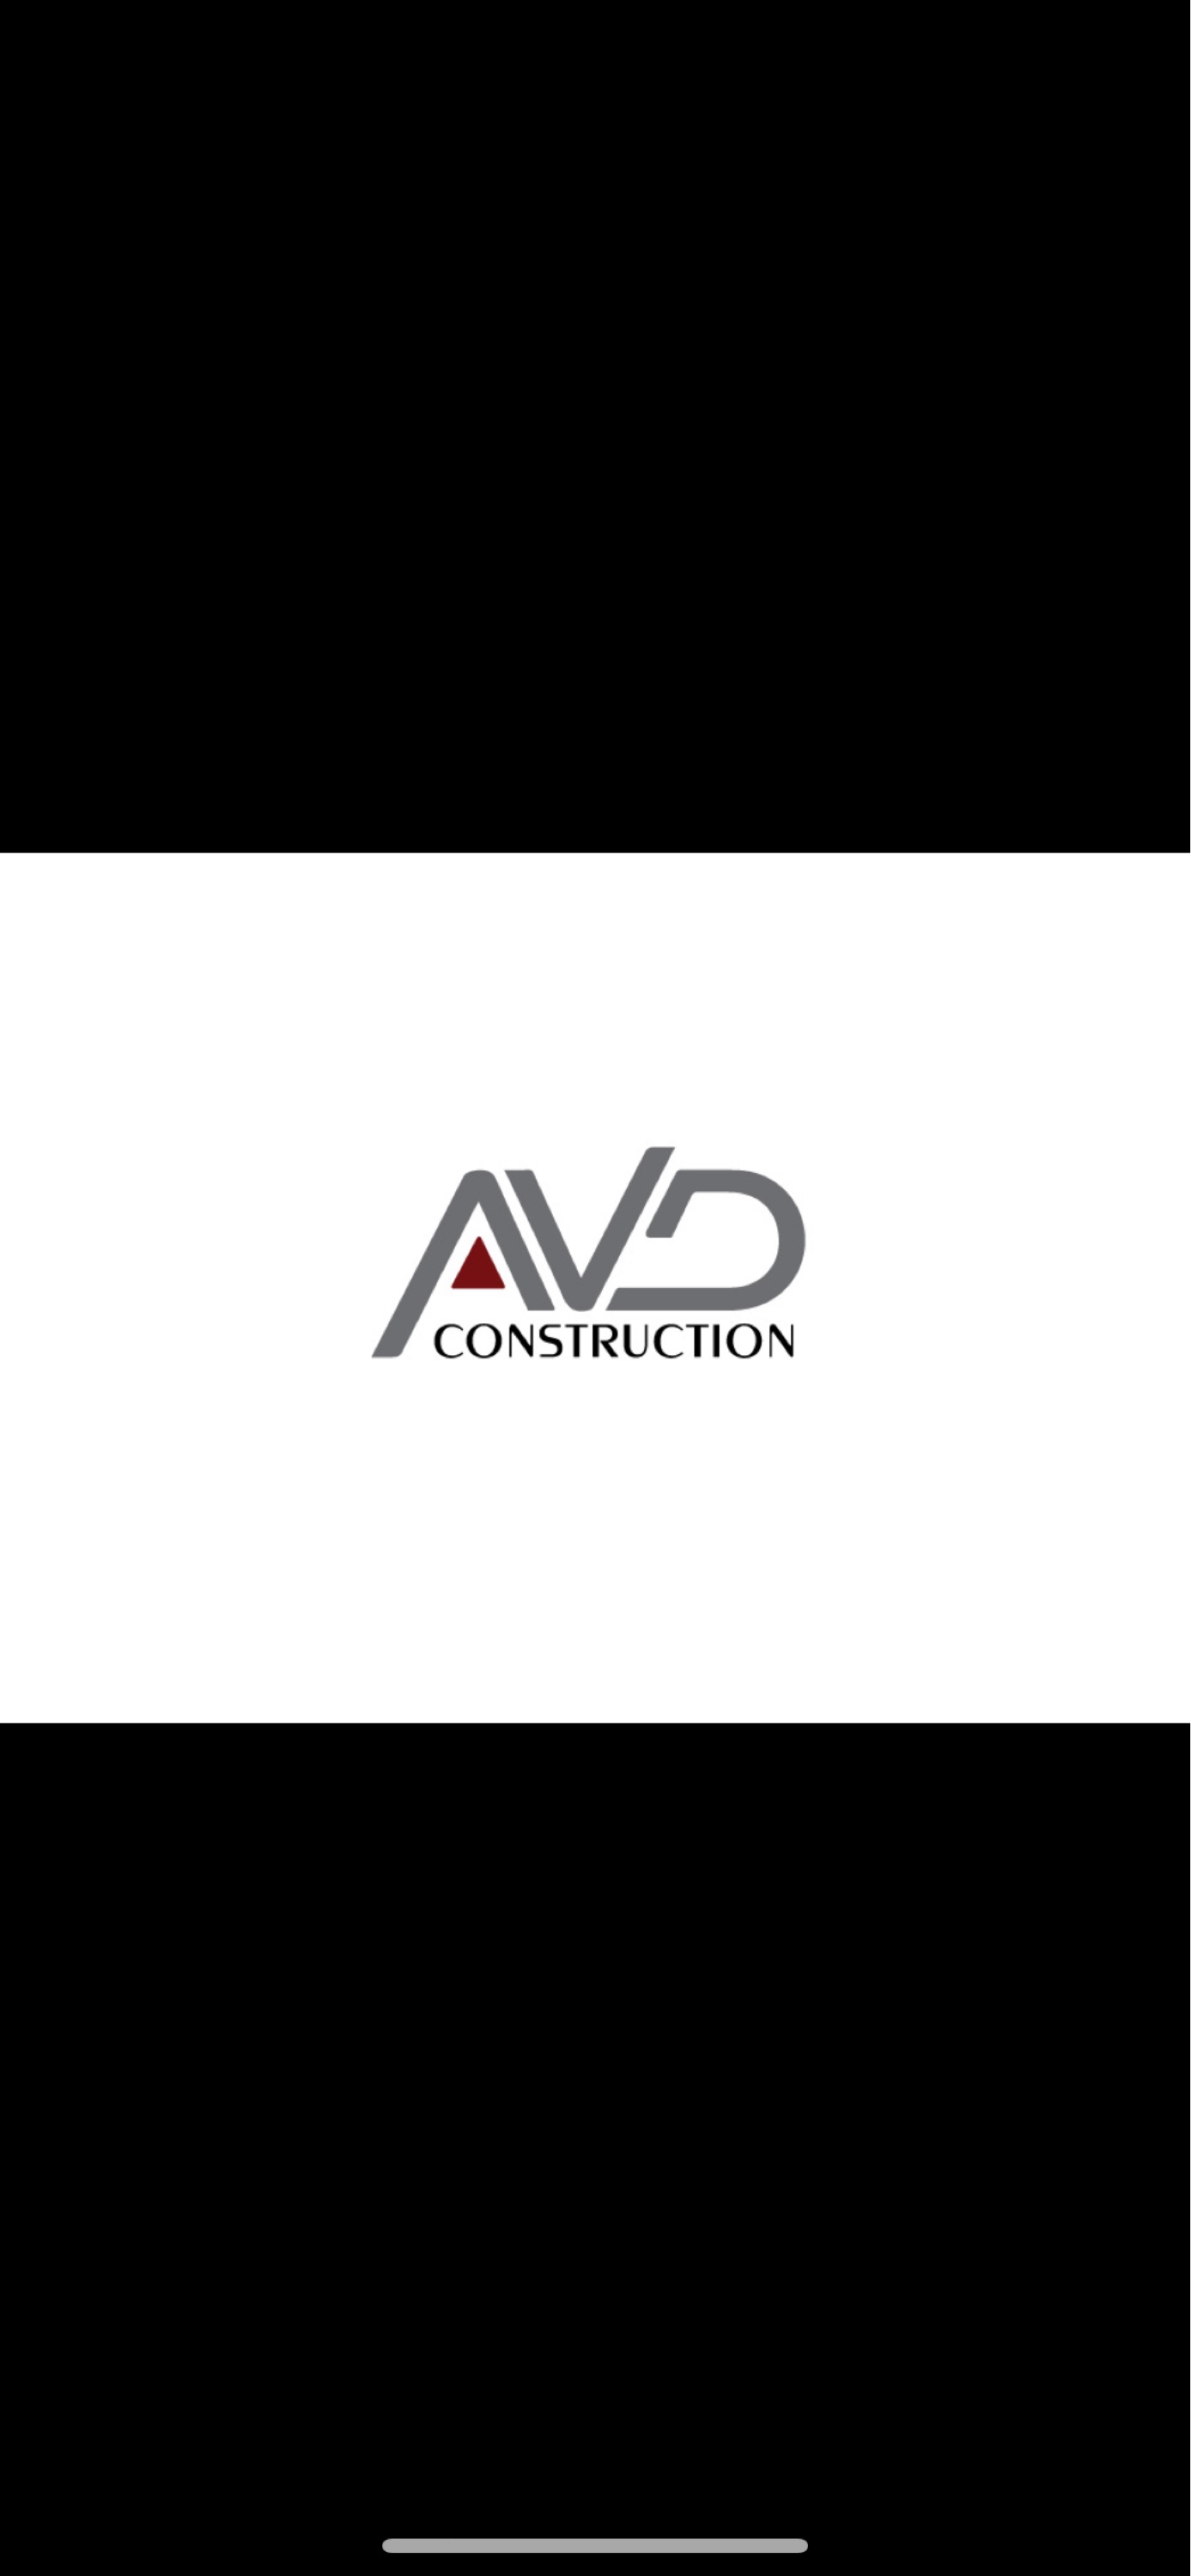 AVD Construction Logo